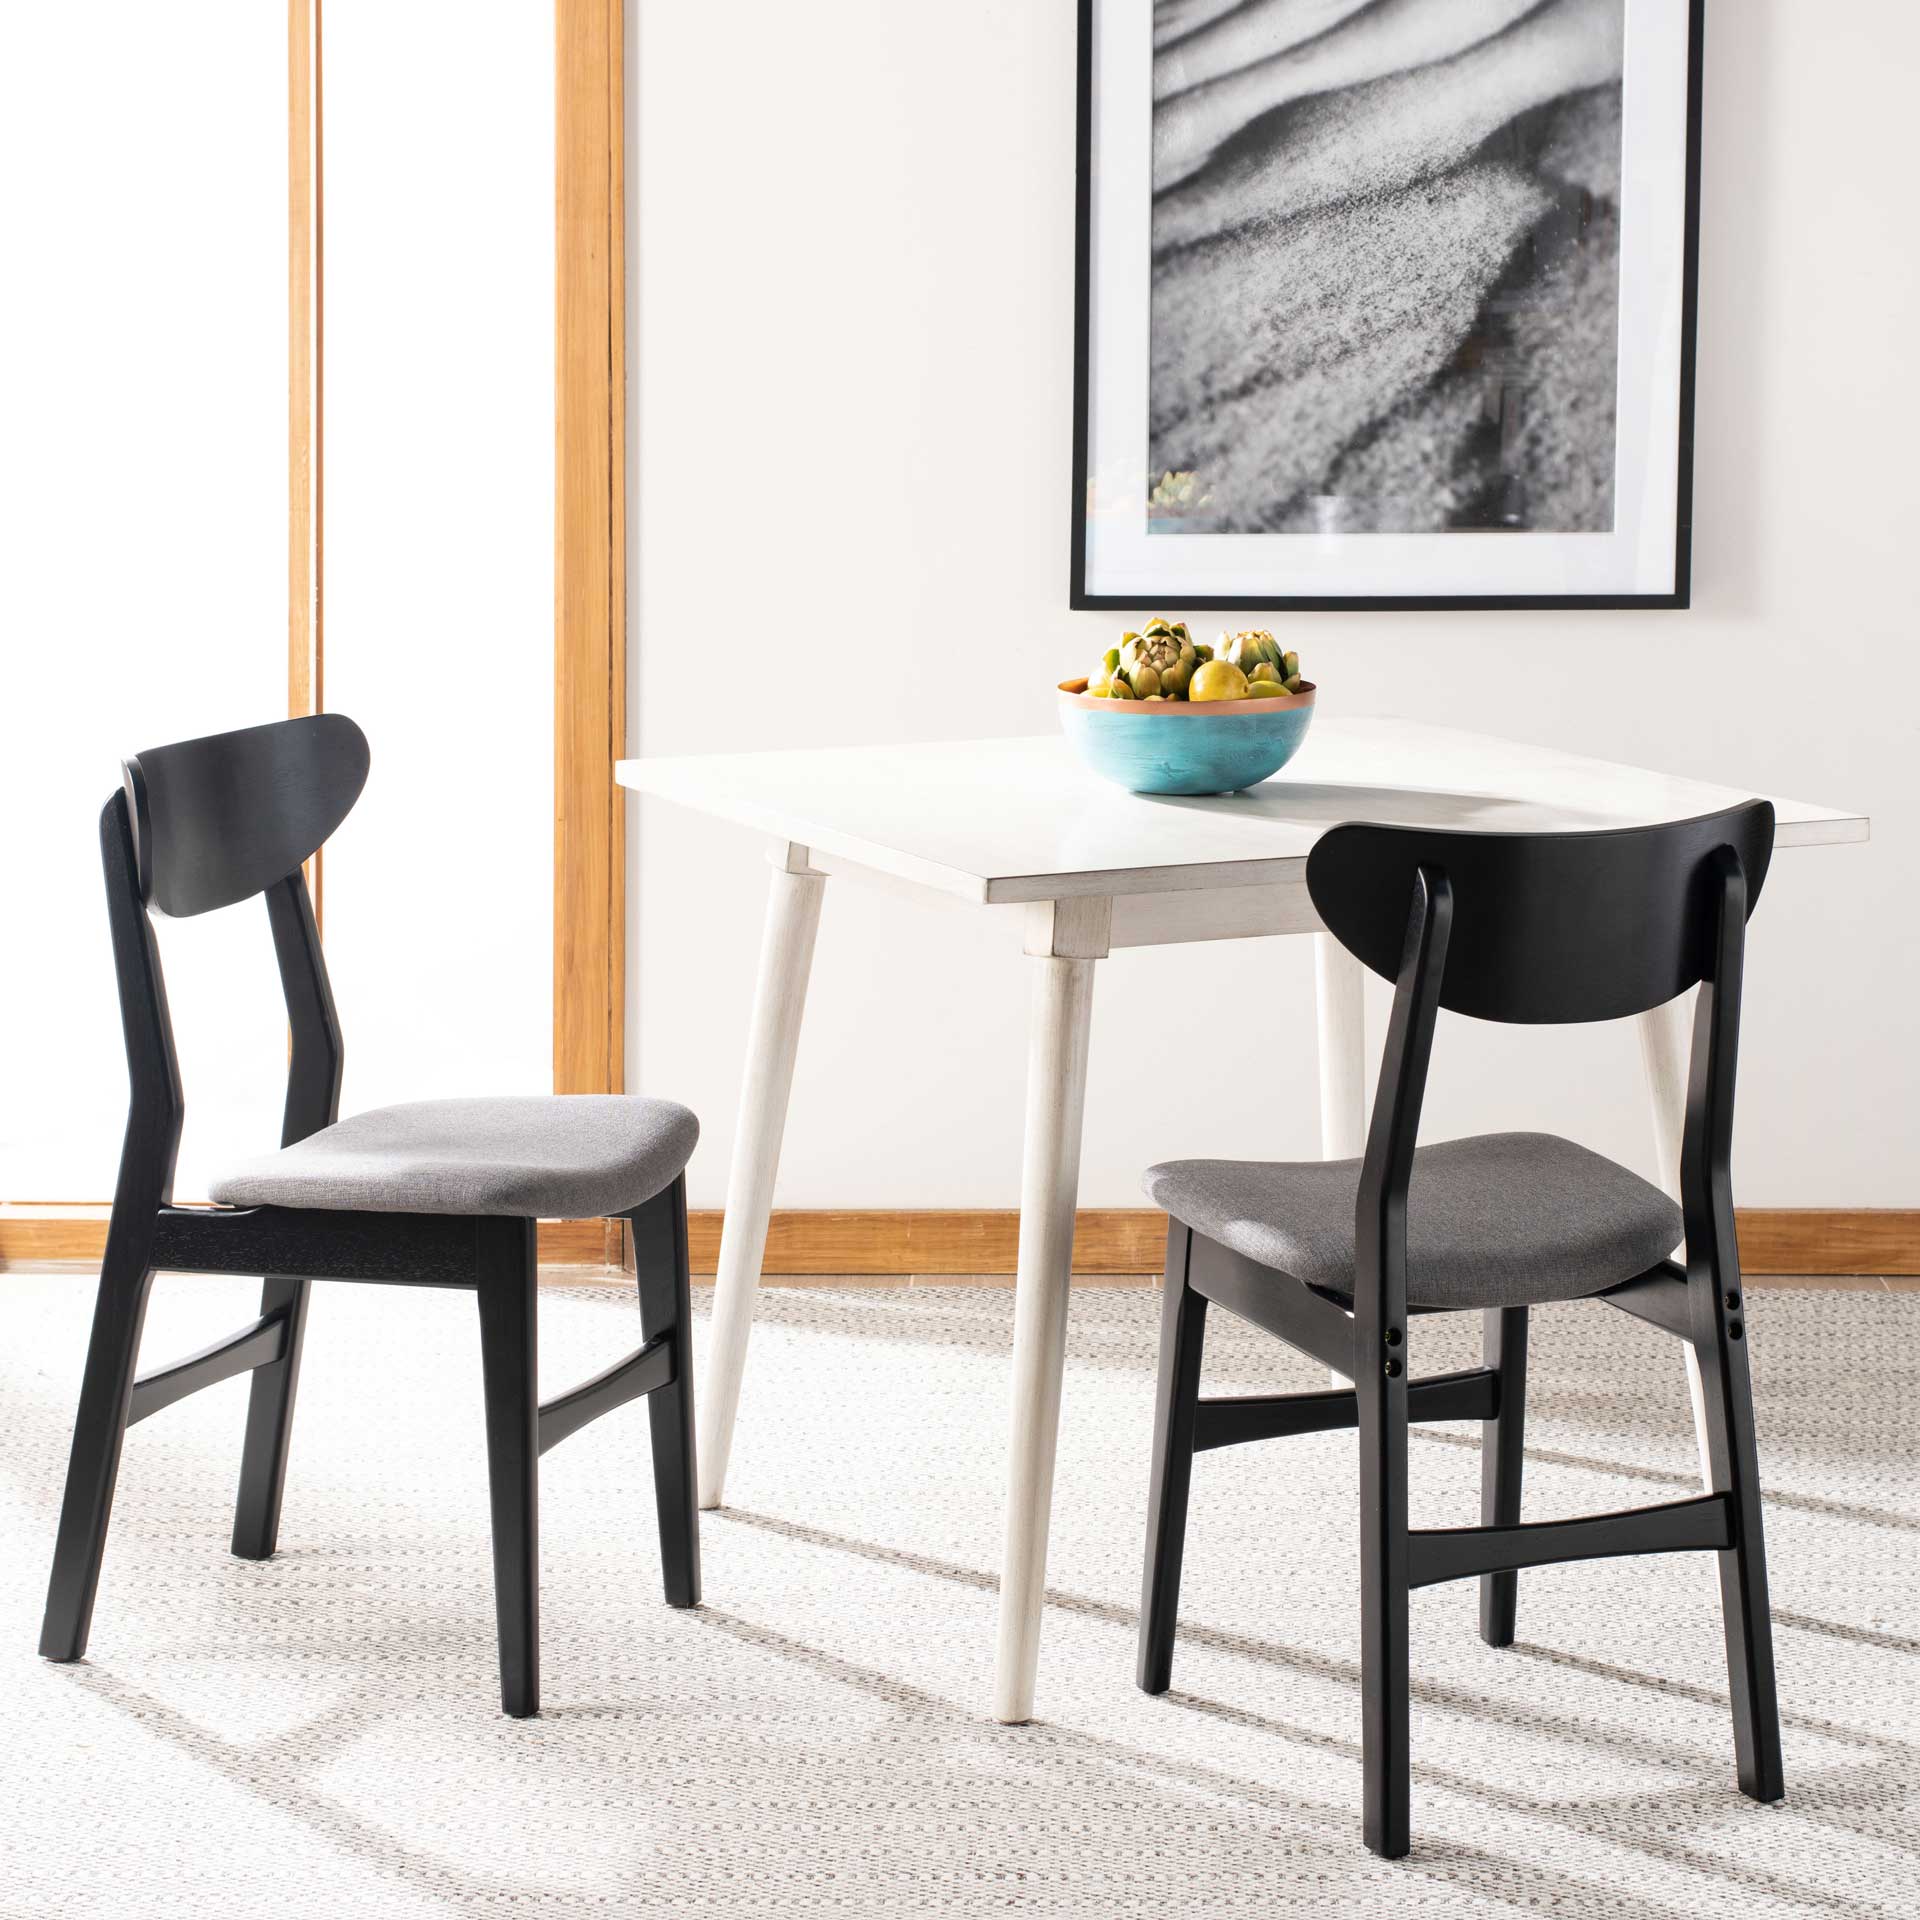 Lucas Retro Dining Chair Black/Gray (Set of 2)